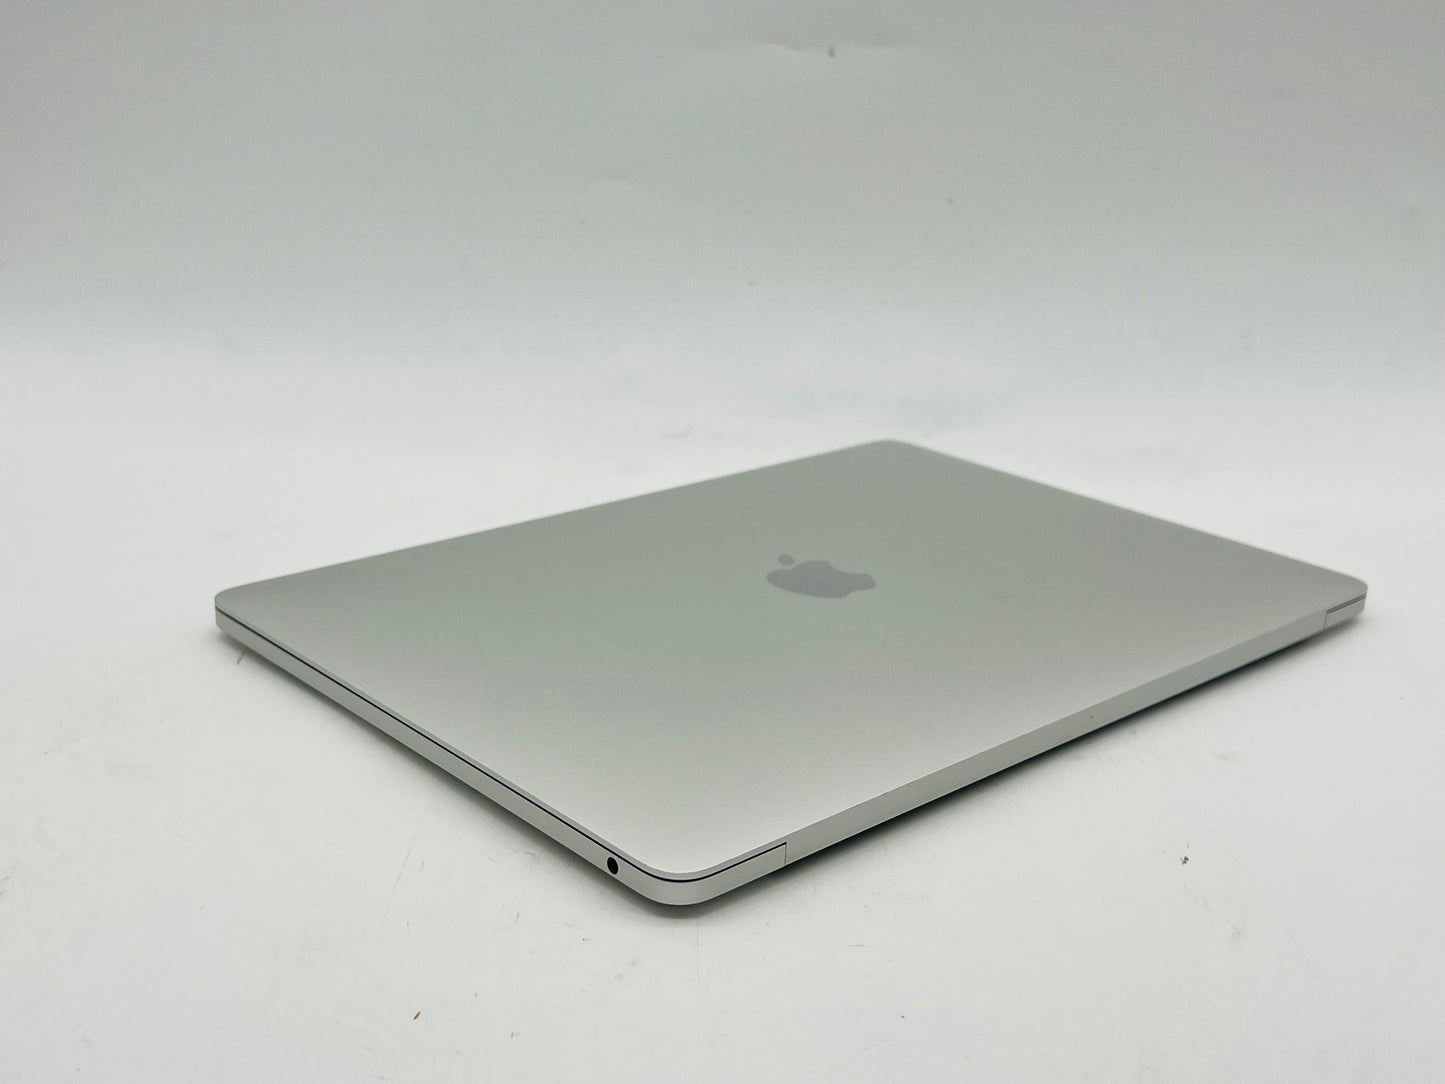 Apple 2019 MacBook Pro 13 in TB 1.4GHz Quad-Core i5 16GB RAM 256GB SSD IIPG645